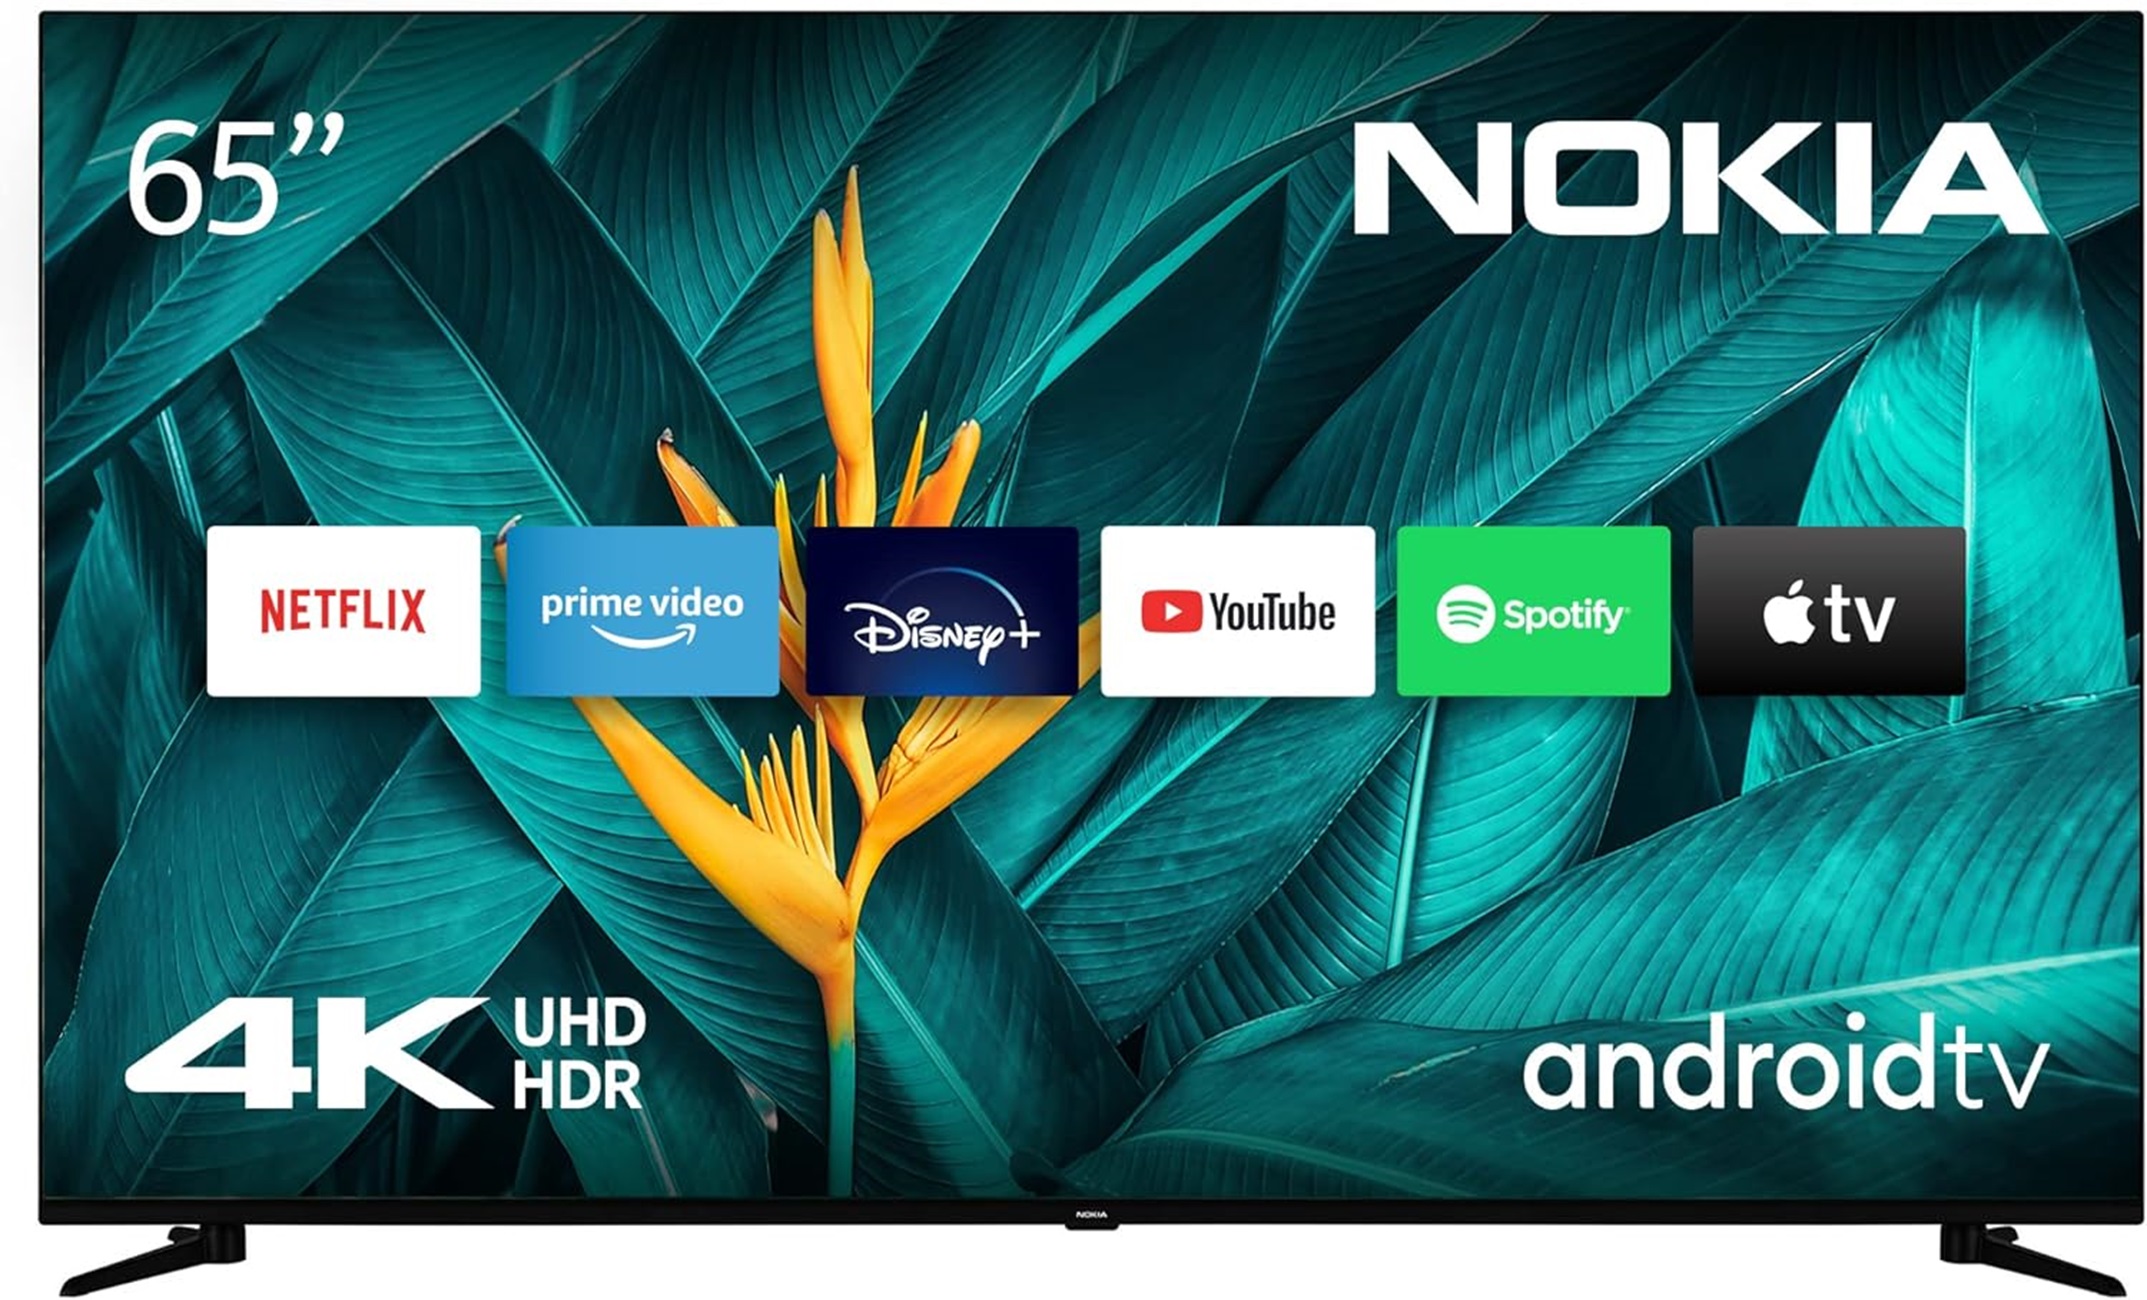 65" 4K UHD Smart TV Nokia v službe Android TV